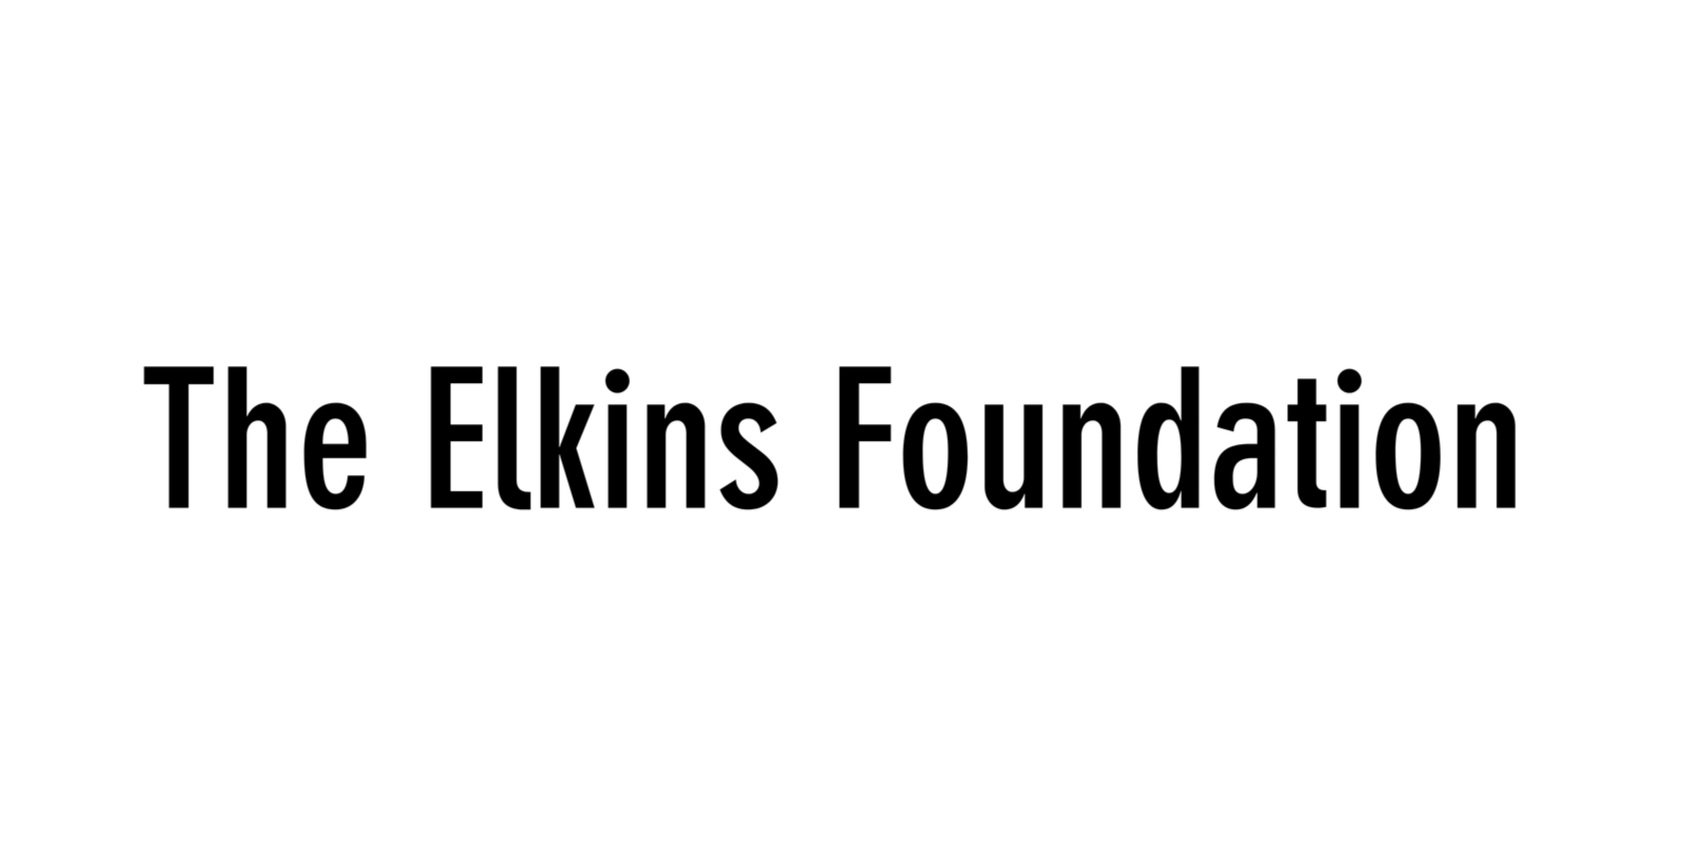 The+Elkins+Foundation.jpg